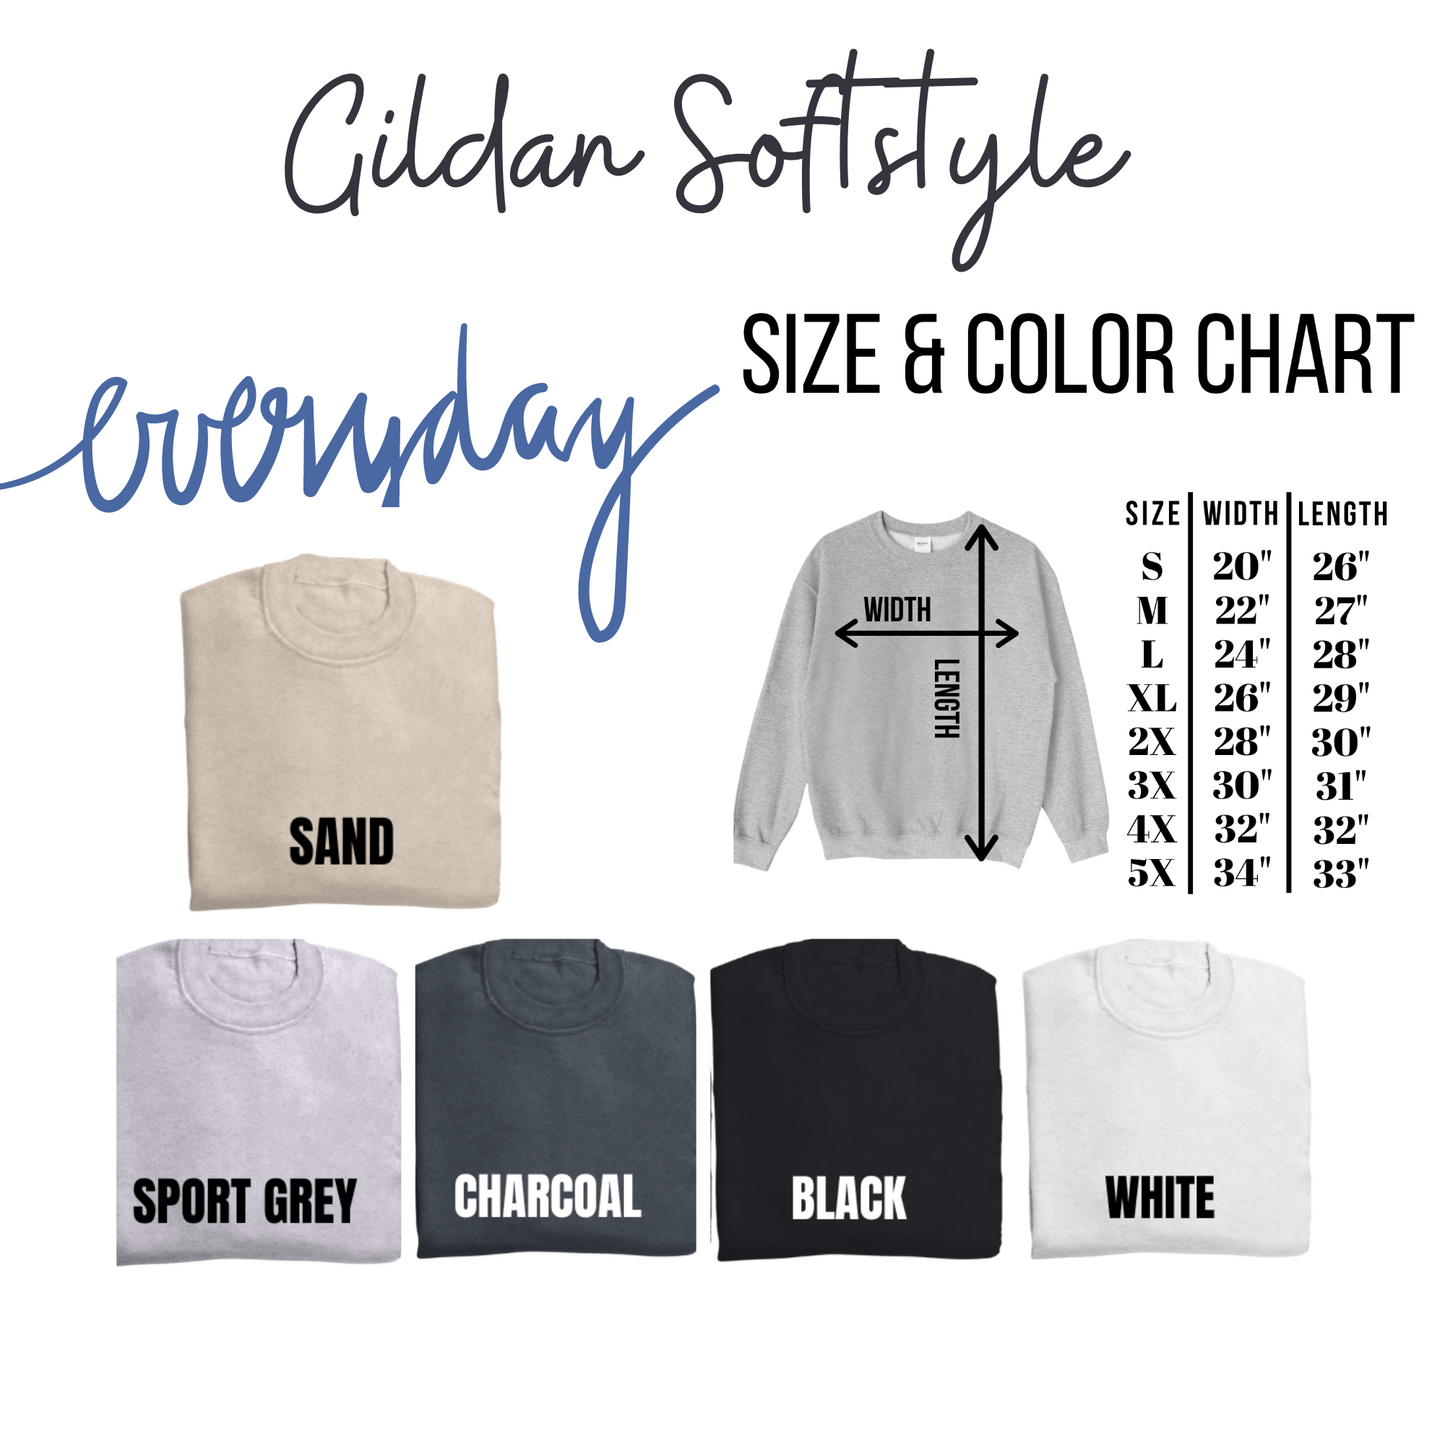 Preppy Jaguars Gildan Softstyle Sweatshirt or T-shirt